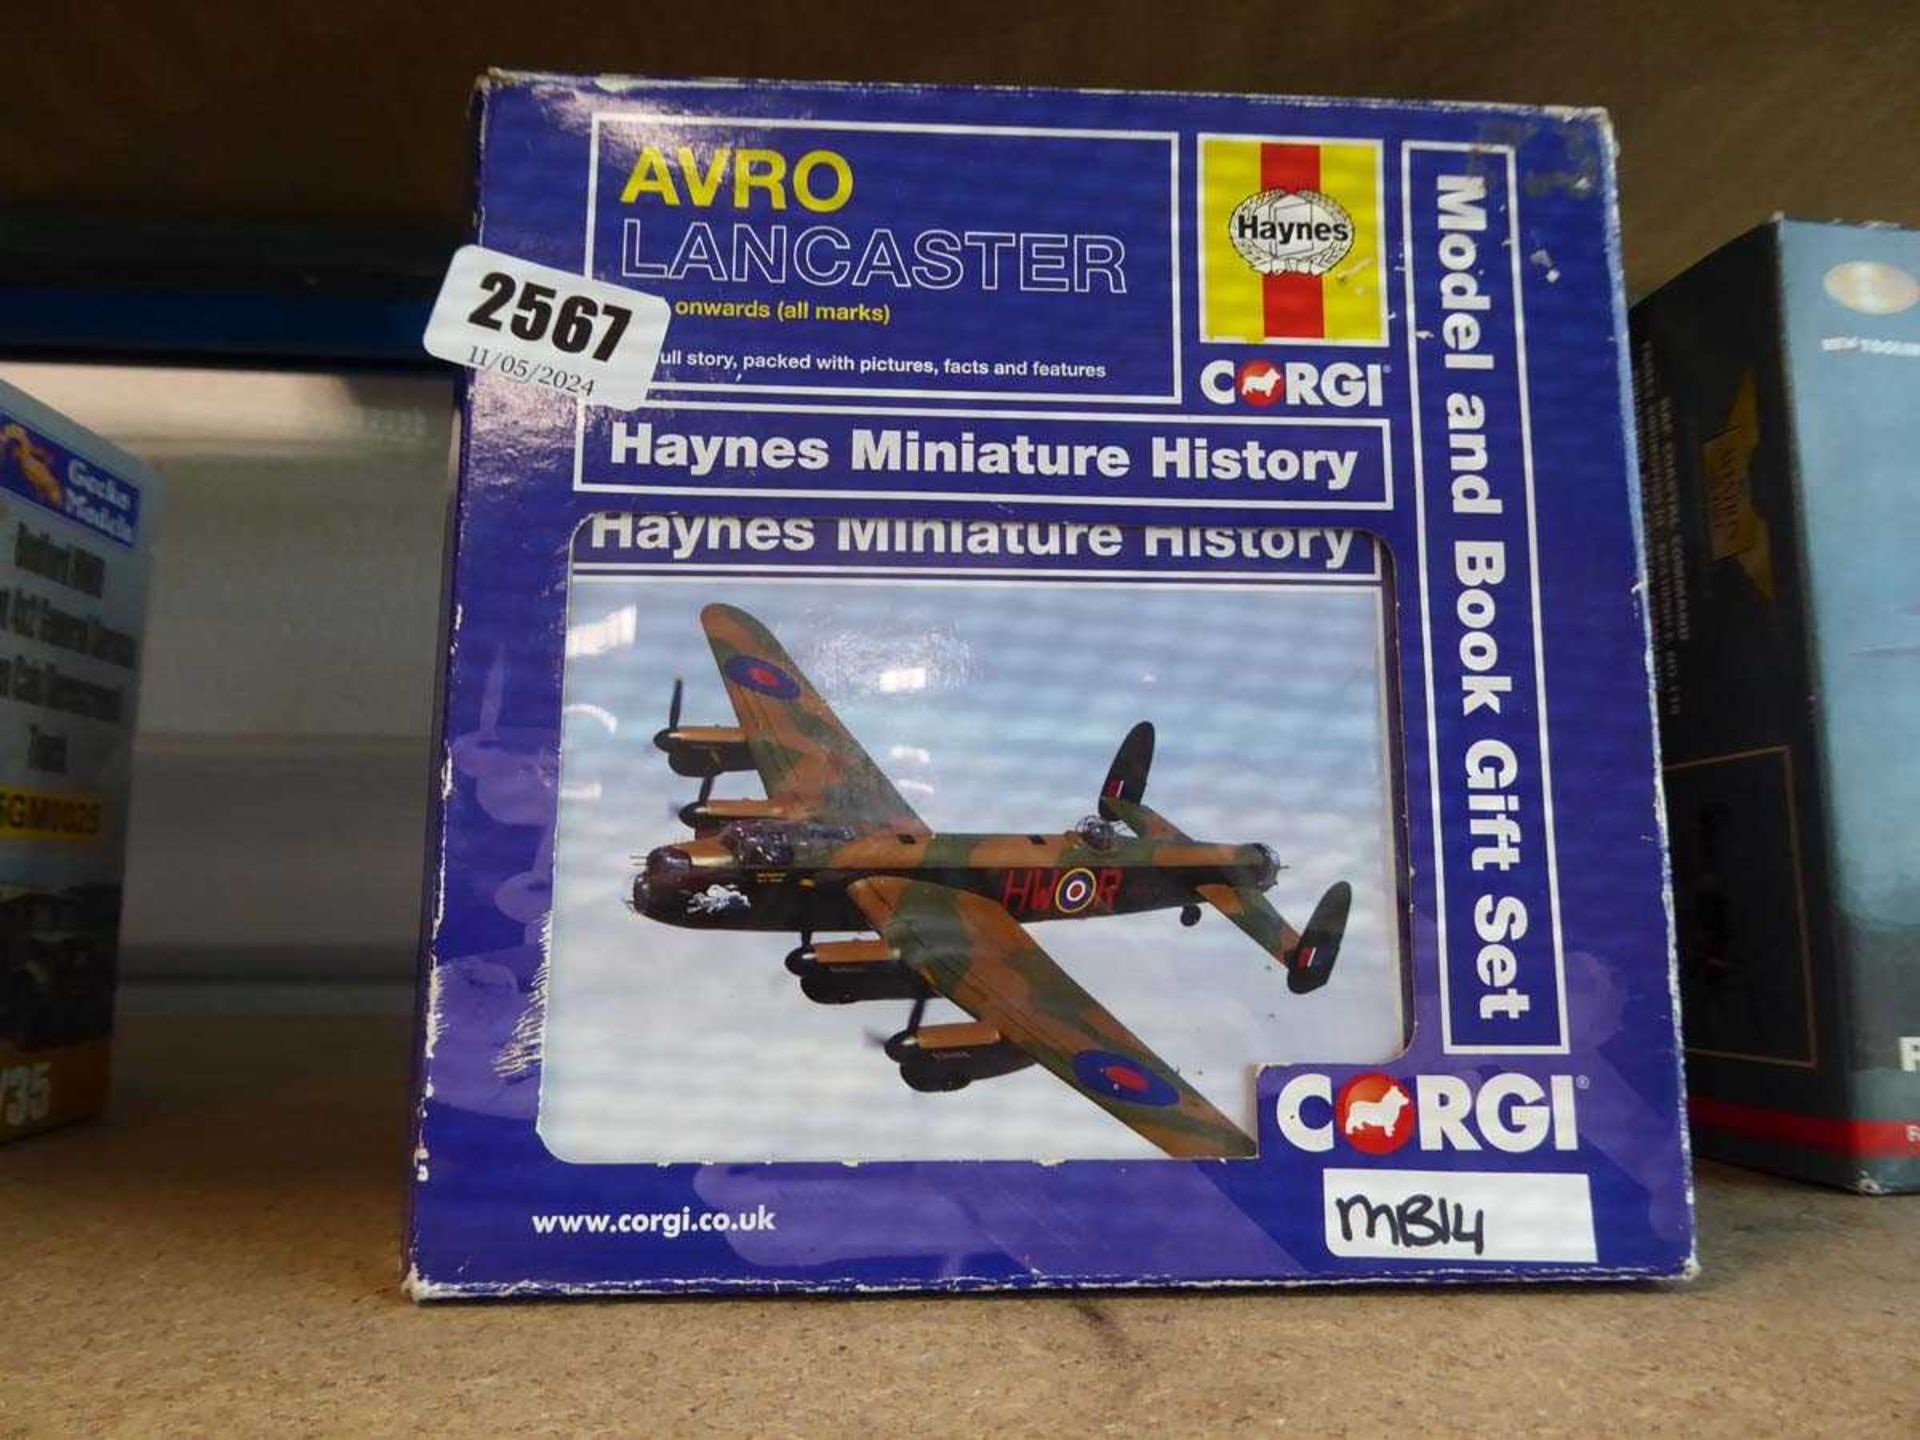 Corgi Avro Lancaster aeroplane model and book gift set